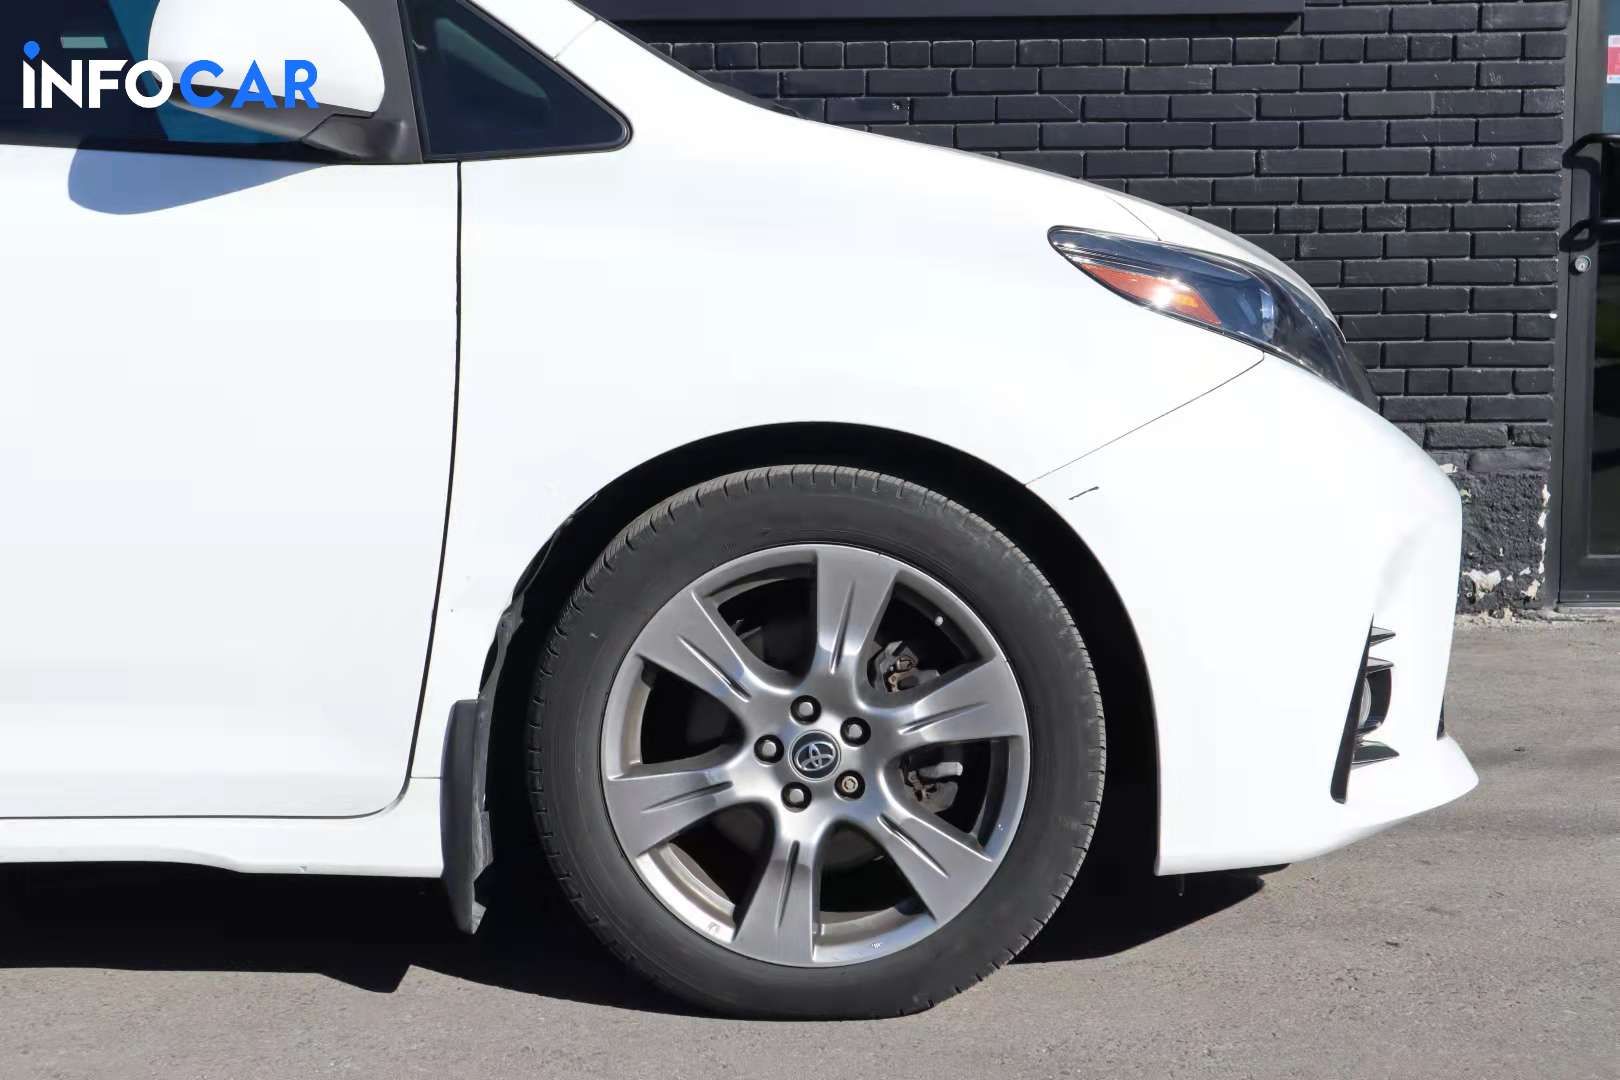 2018 Toyota Sienna SE - INFOCAR - Toronto Auto Trading Platform